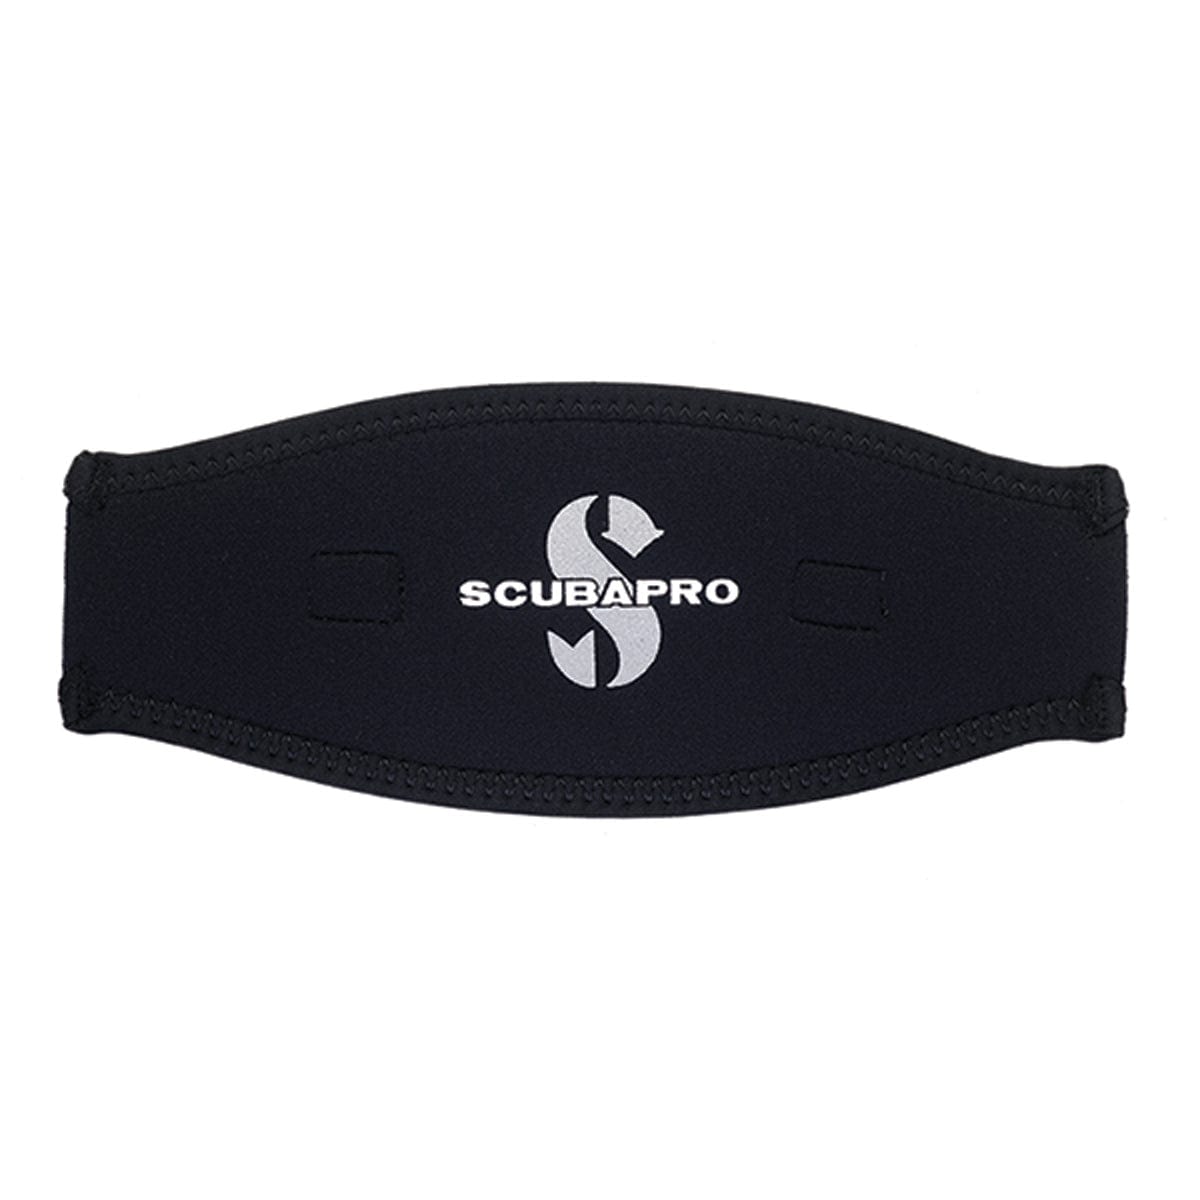 Scubapro Neoprene Mask Strap 2.5MM - Black/Black - 4